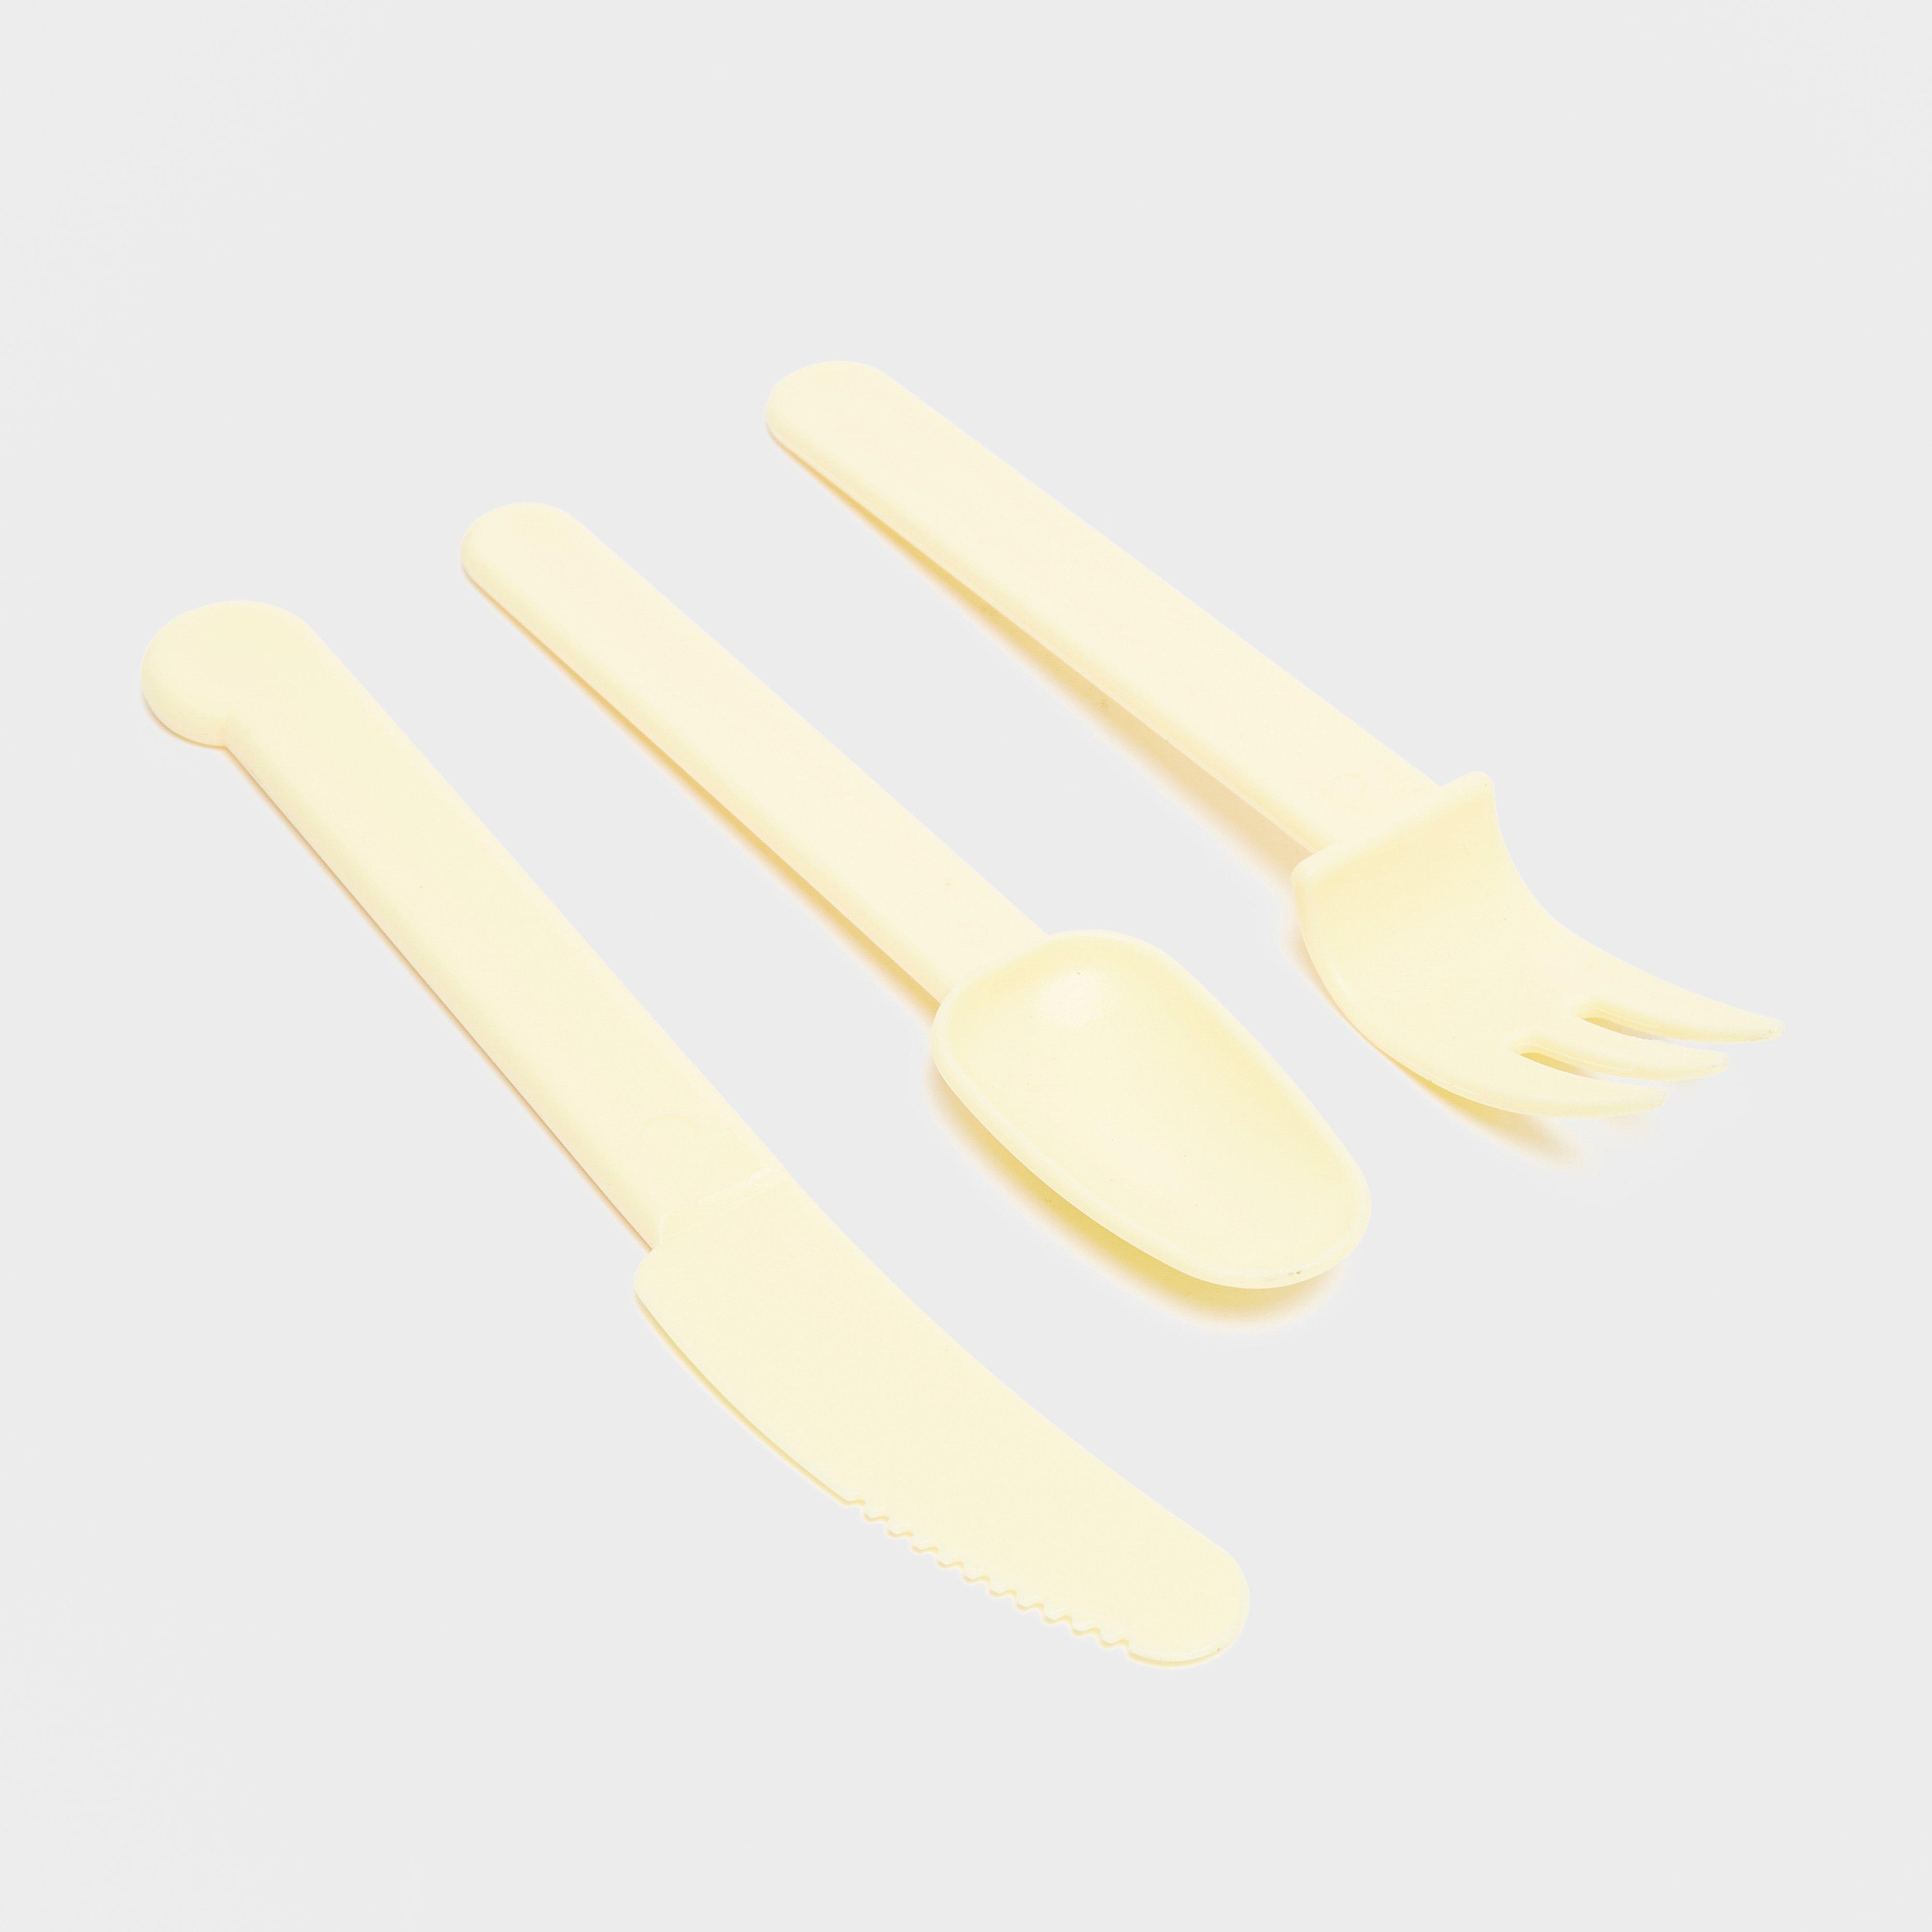 Eurohike 12 Piece Cutlery Set Review